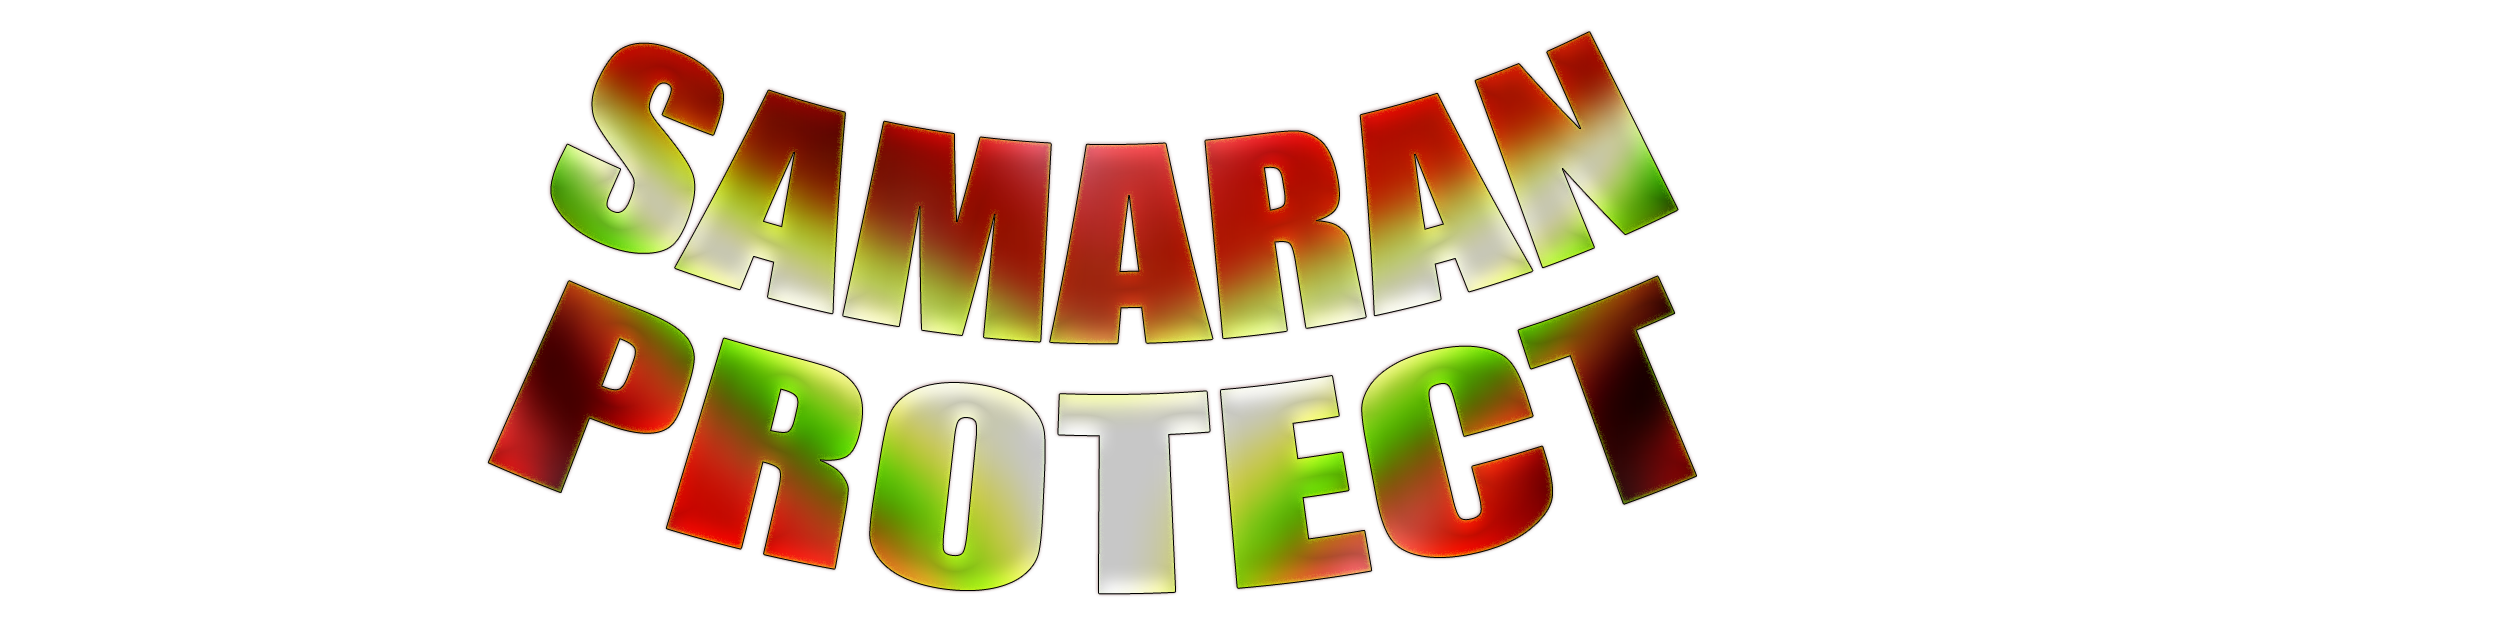 Samaran Protect